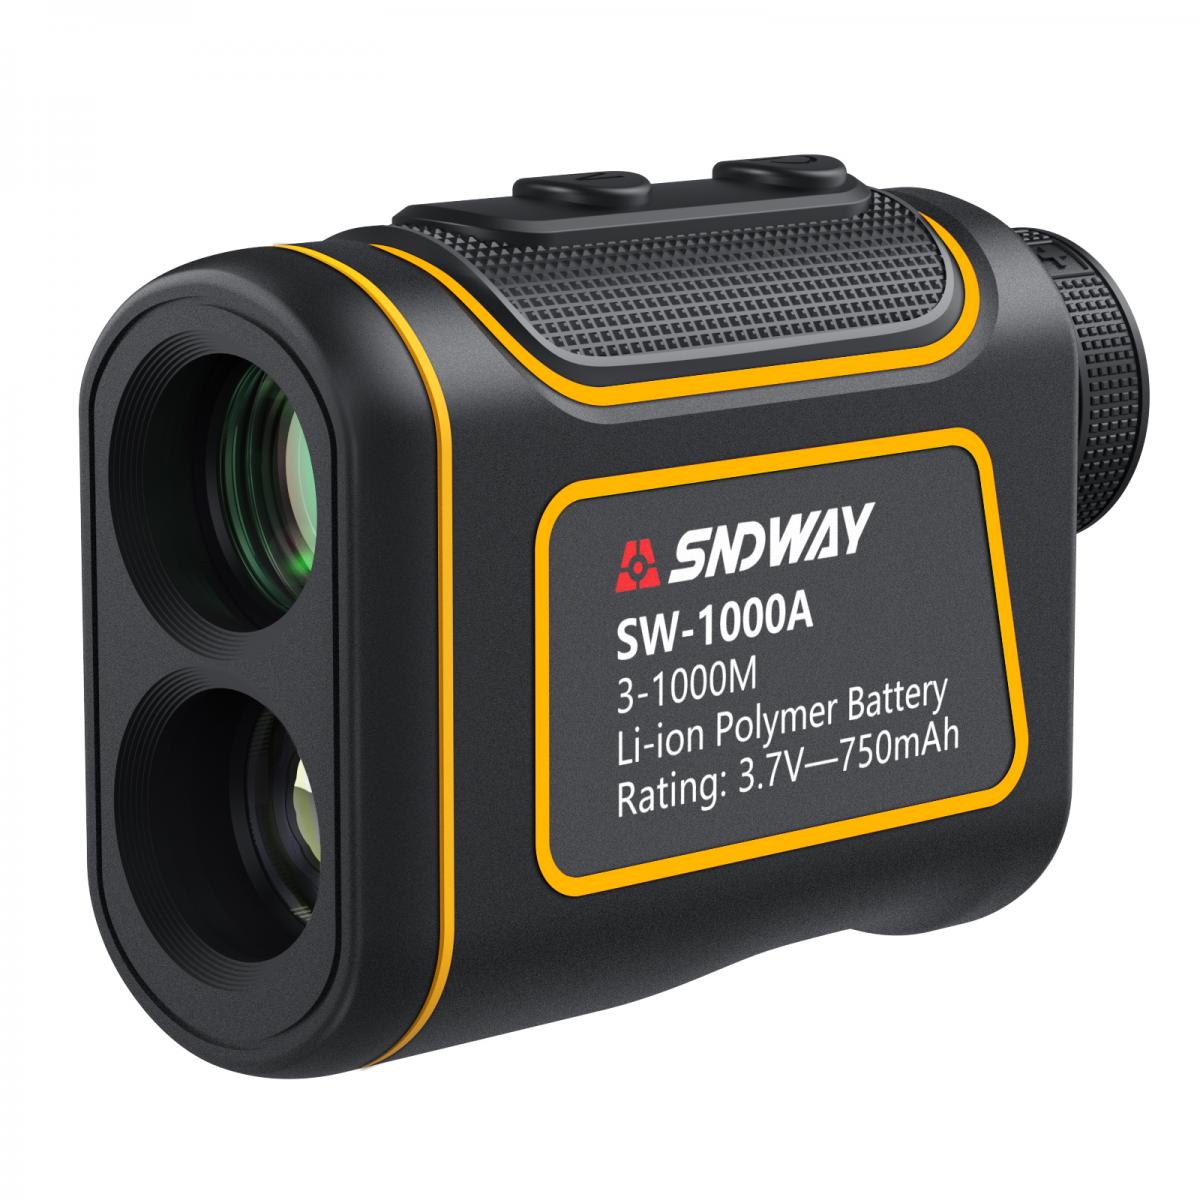 SNDWAY Digital Laser Distance Meter Camera USB Recharge Portable